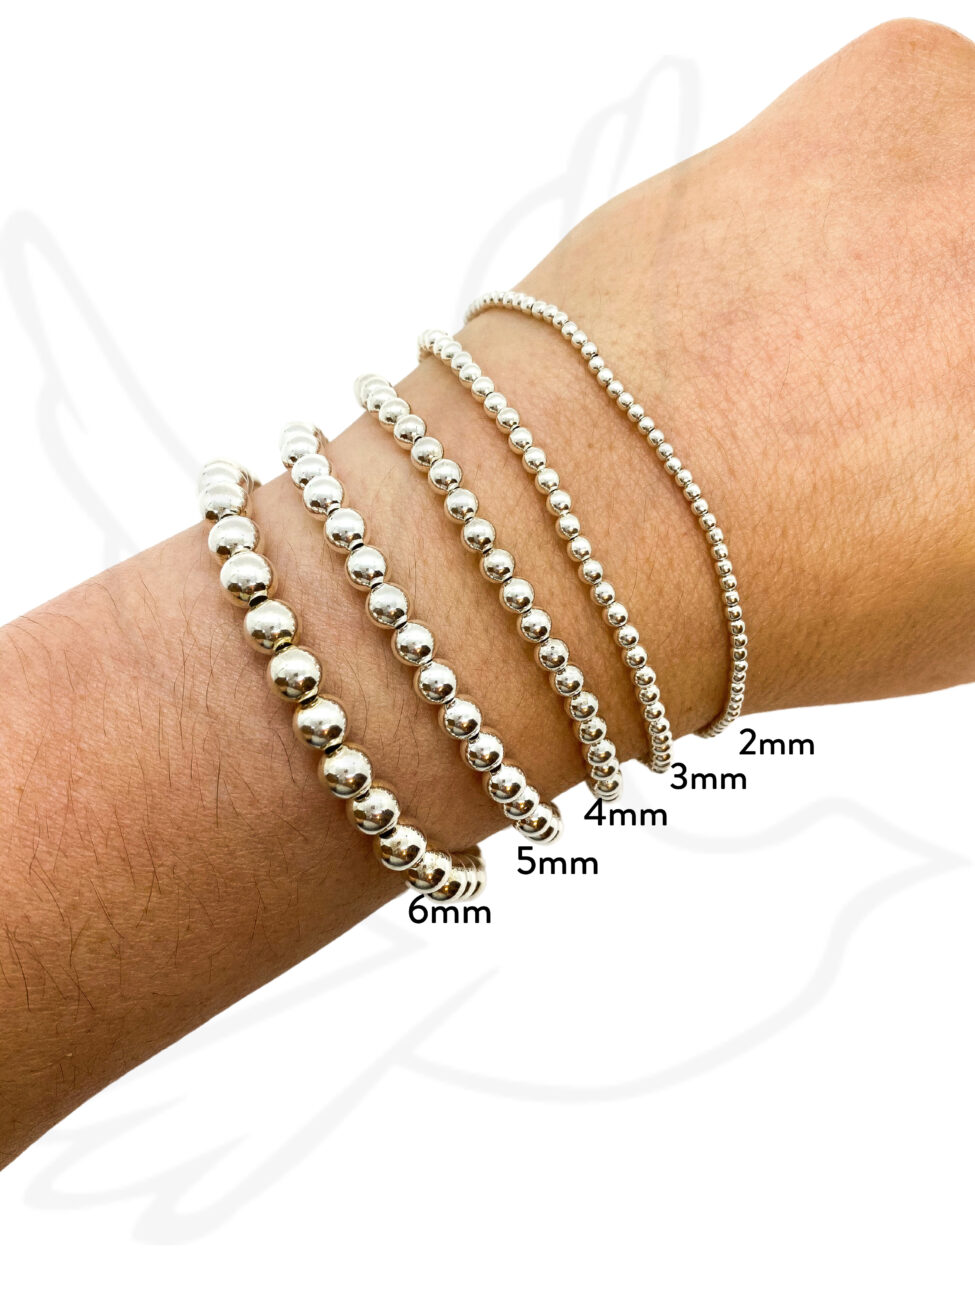 Sterling Silver Beads Bracelet